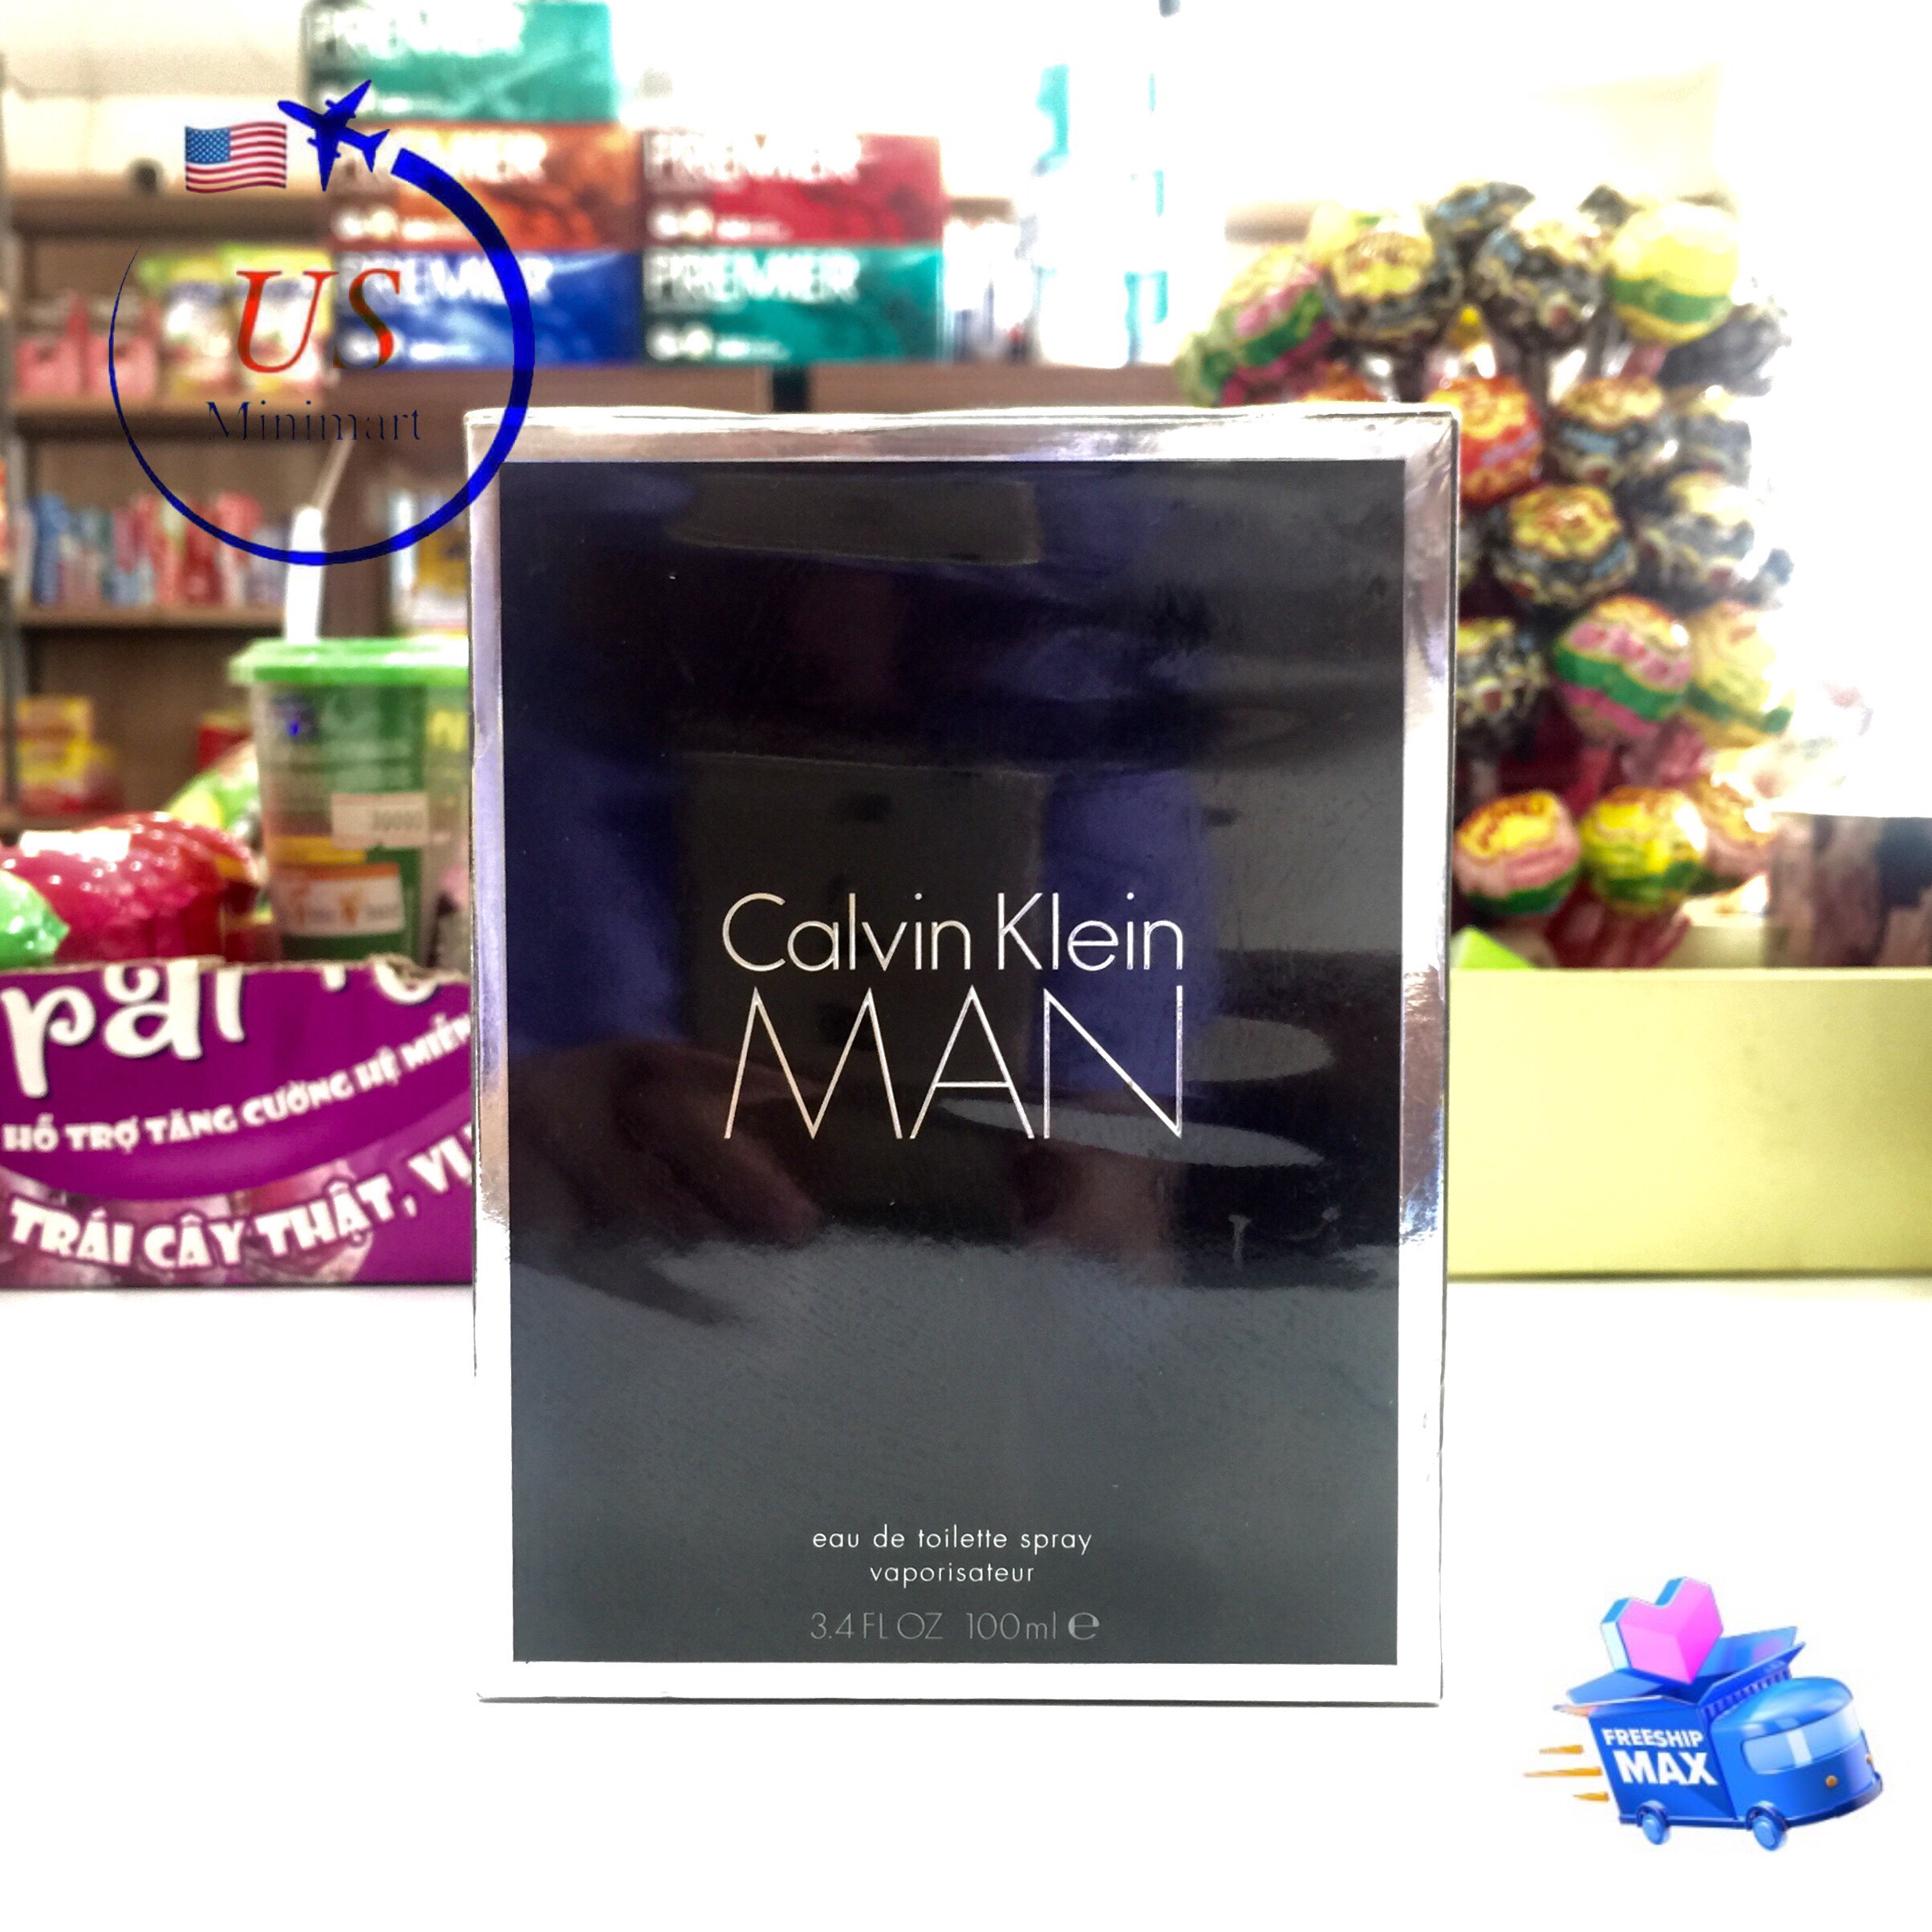 Nước hoa nam Calvin Klein Man 100ml - US MINIMART 